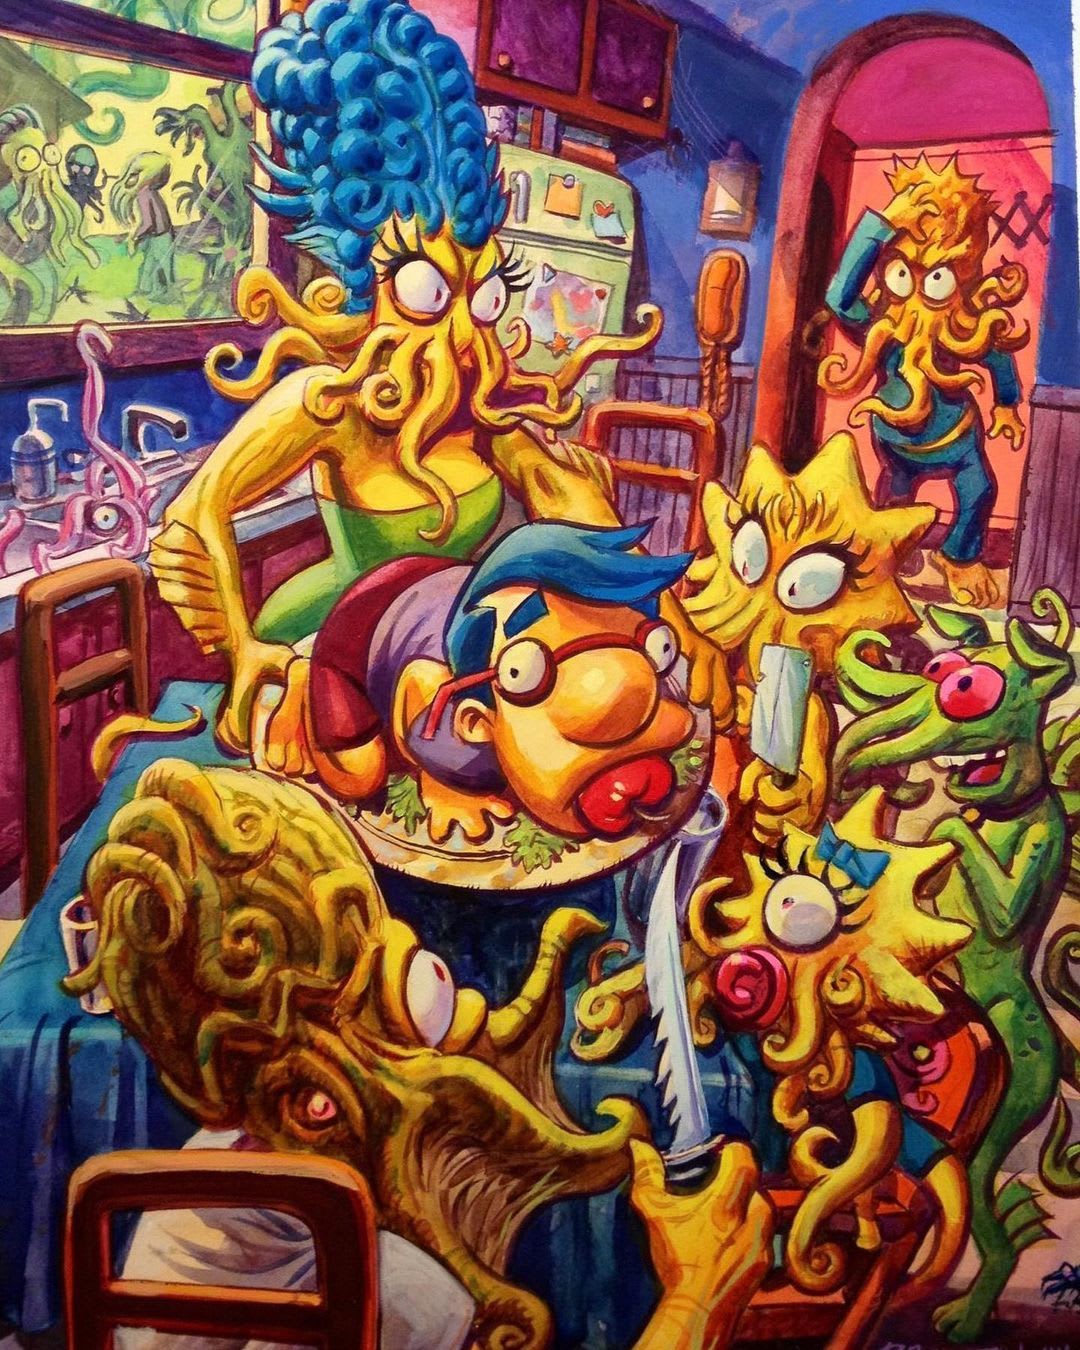 Lovecraftian Simpsons from Treehouse of Horror #19 (2013) by Dan Brereton @dan_brereton_illustrator . #danbrereton...